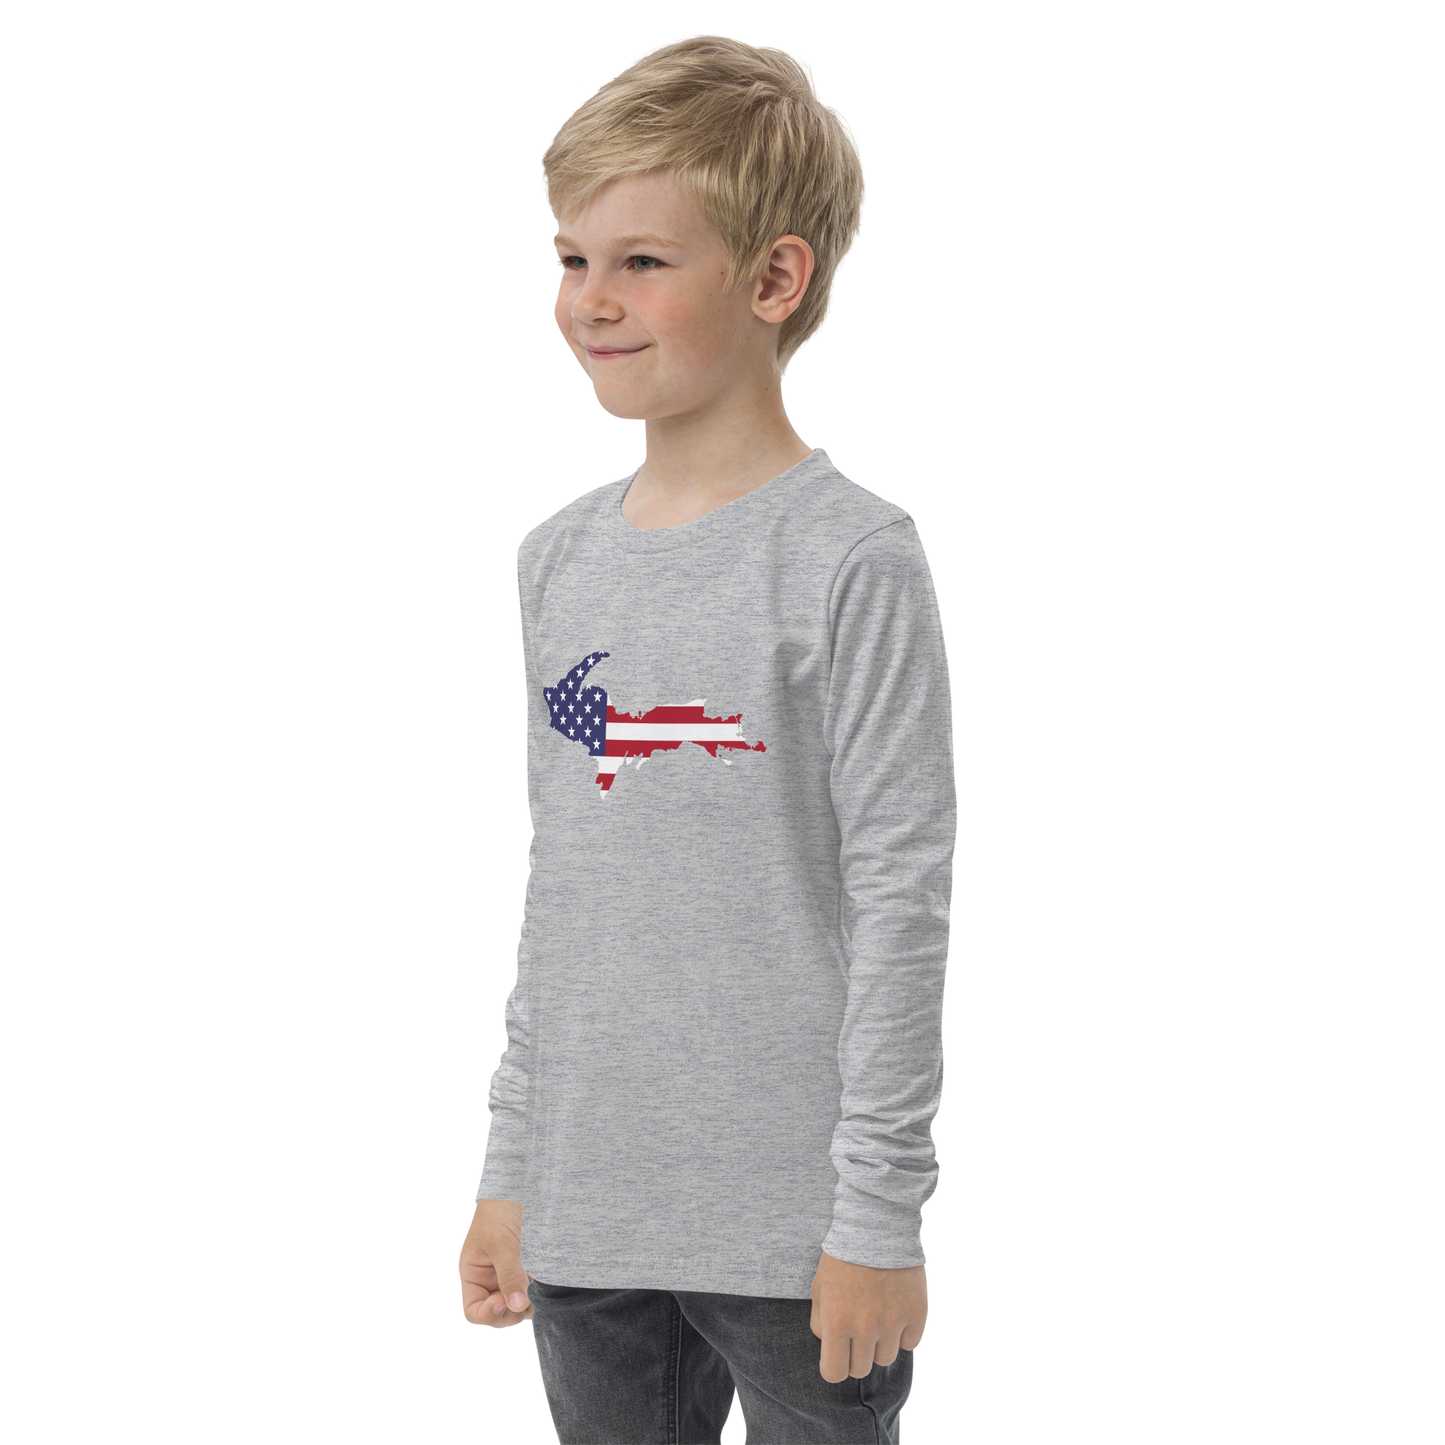 Michigan Upper Peninsula T-Shirt (w/ UP USA Long Sleeve) | Youth Long Sleeve